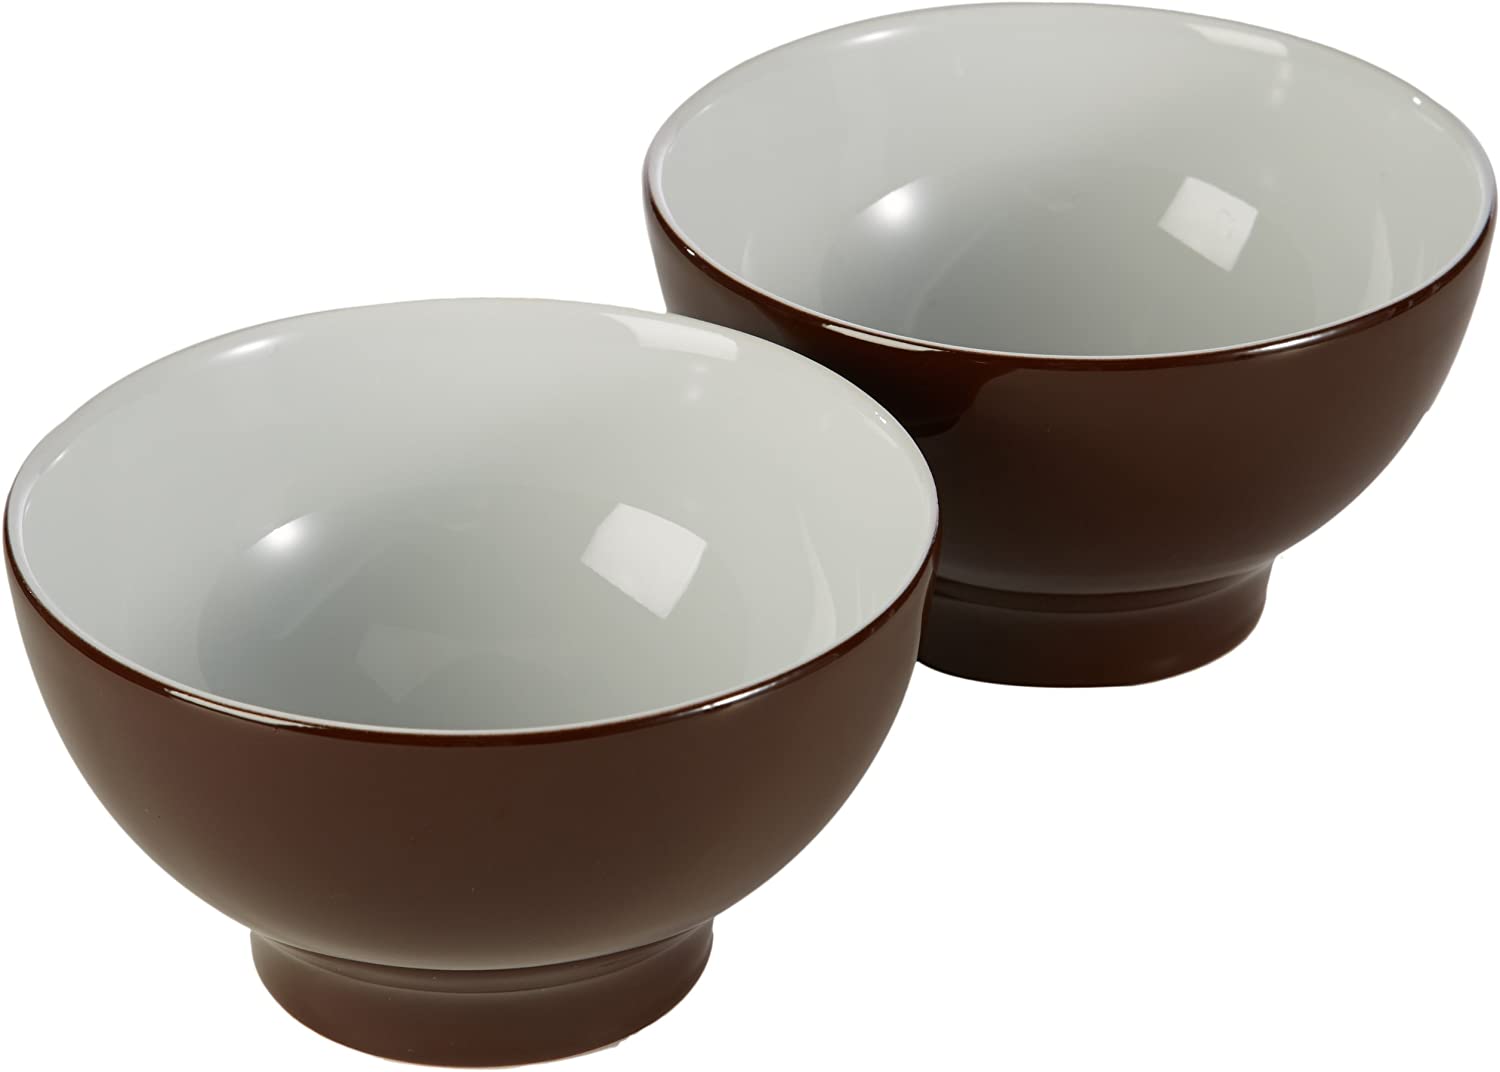 Kahla Pronto 57C148A72605C Bowls Set of 2 Chocolate Brown